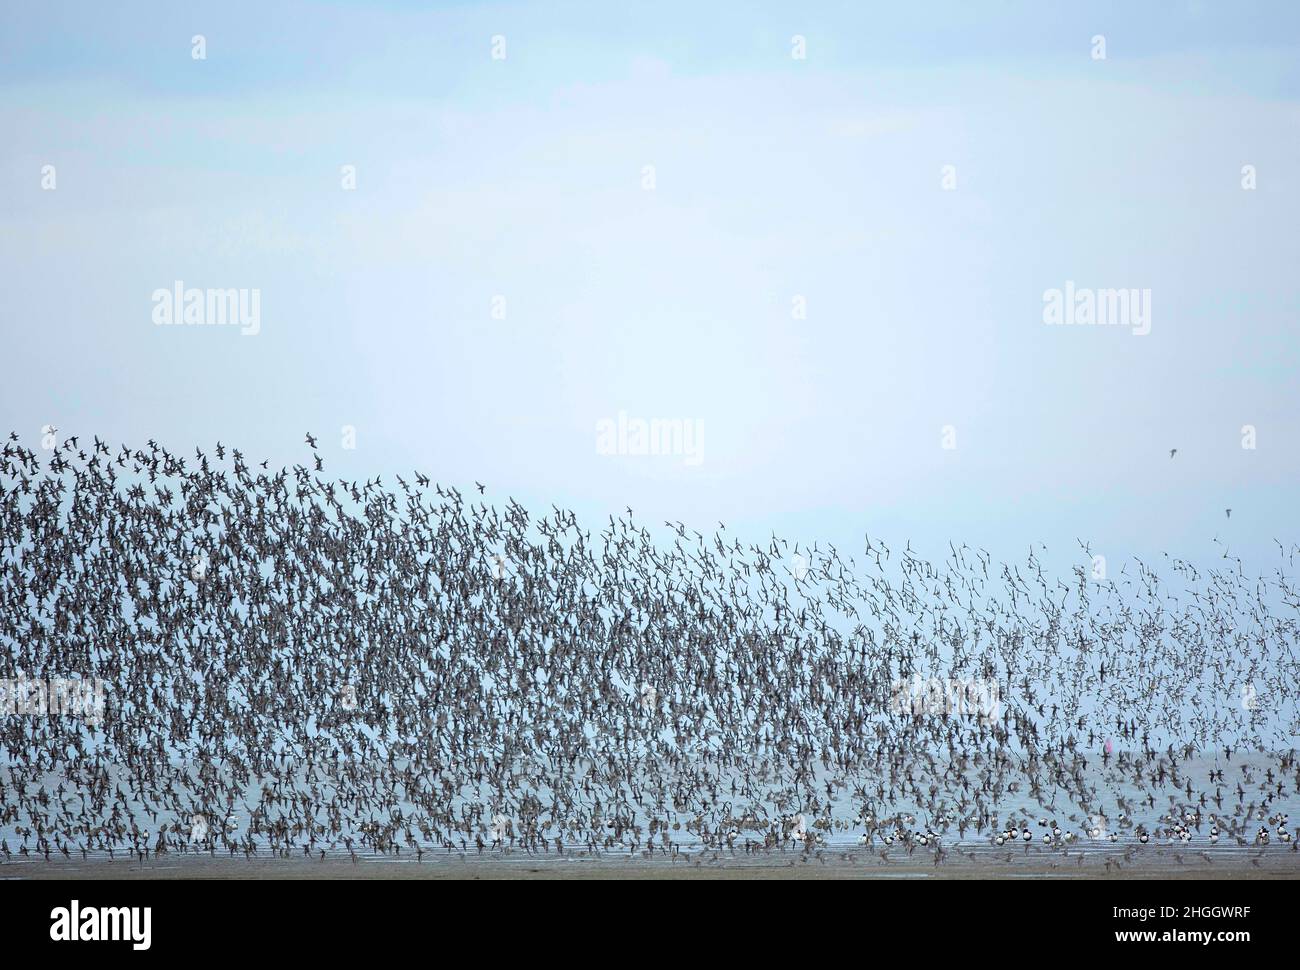 dunlin (Calidris alpina), große fliegende Herde an der Küste, Niederlande, Friesland Stockfoto